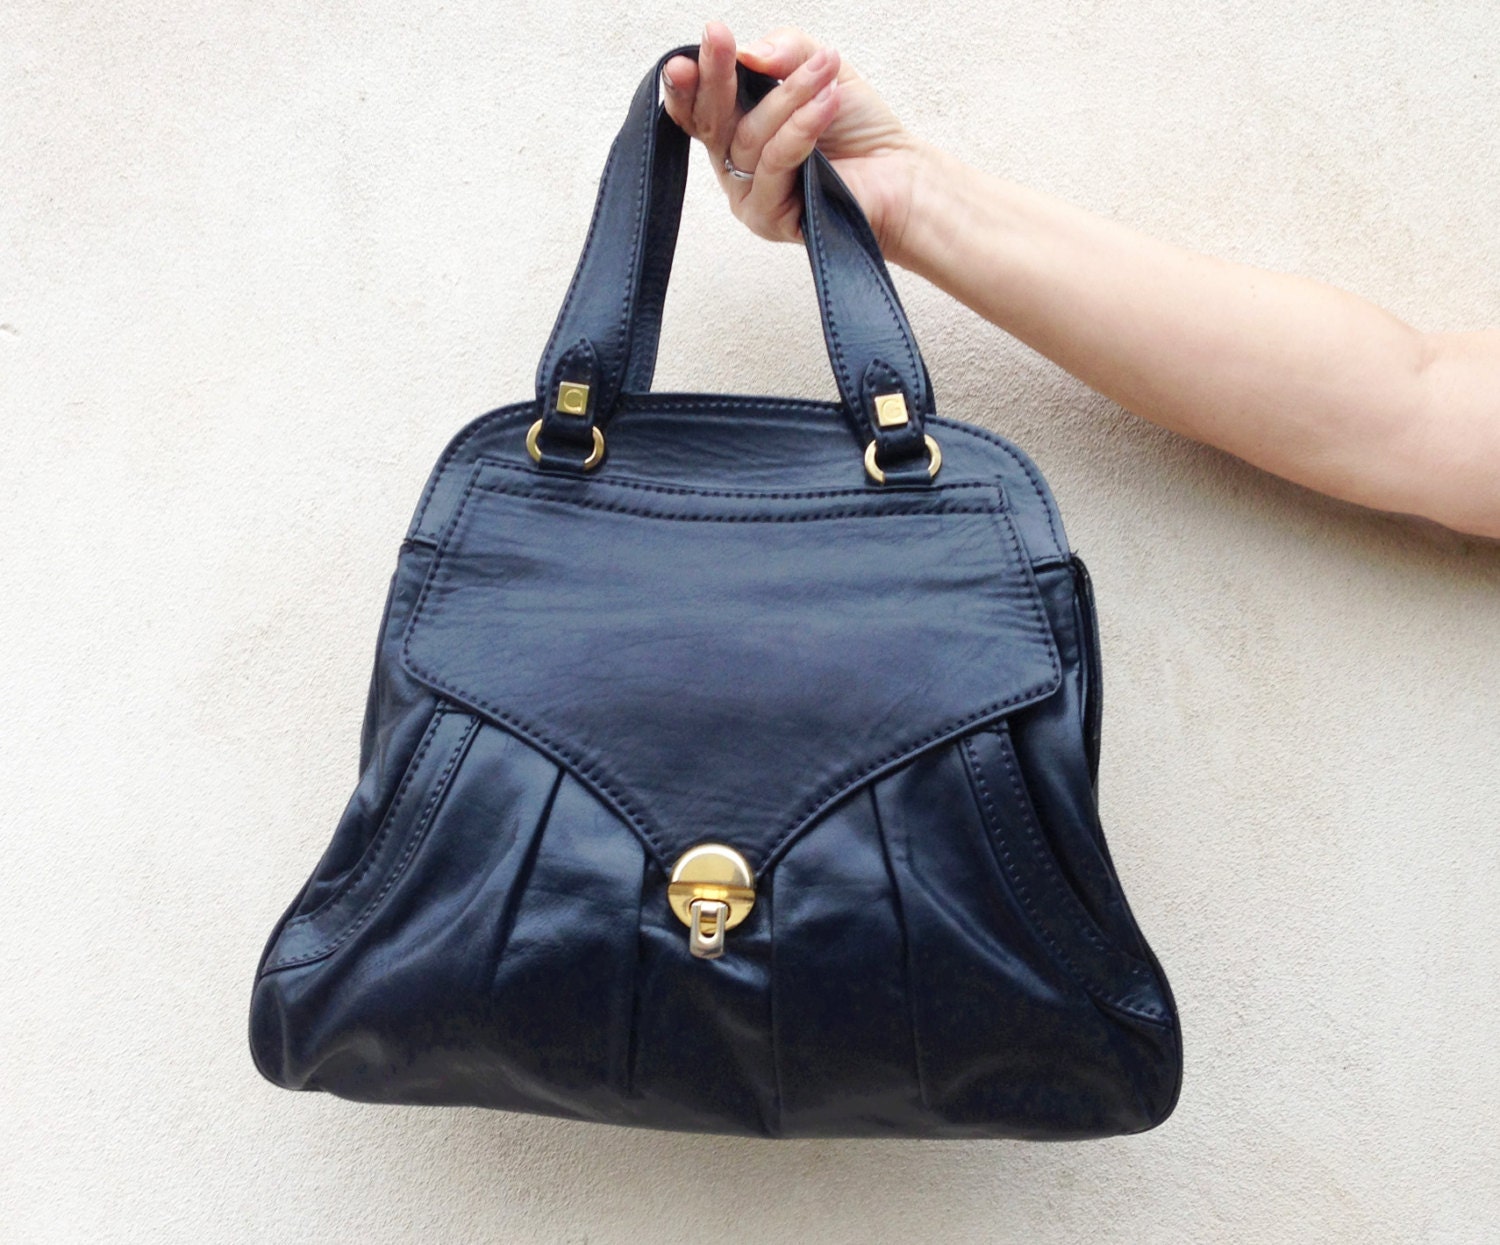 Leather italian handbag / Vintage soft leather envelope clutch